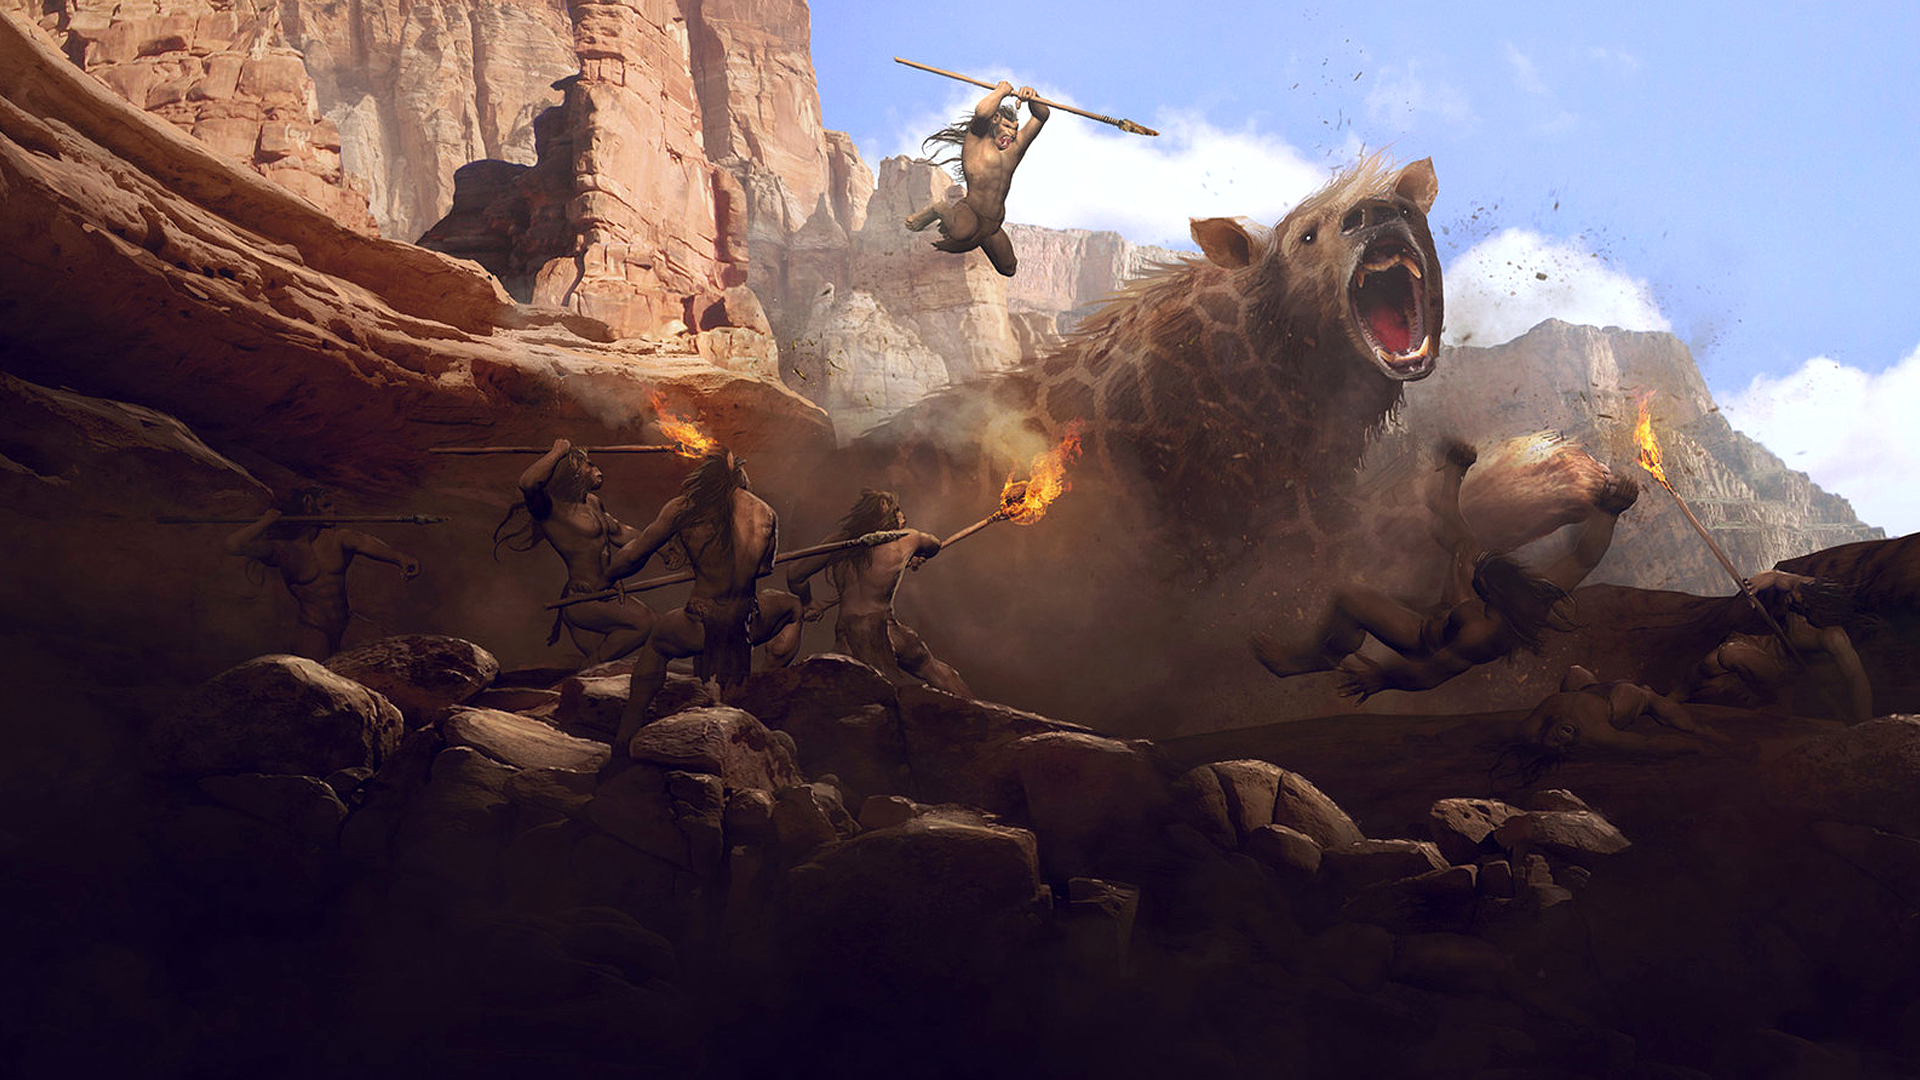 General 1920x1080 Guillem H. Pongiluppi artwork digital art hyenas giant creature spear fire torches battle mountains prehistoric fantasy art hominid